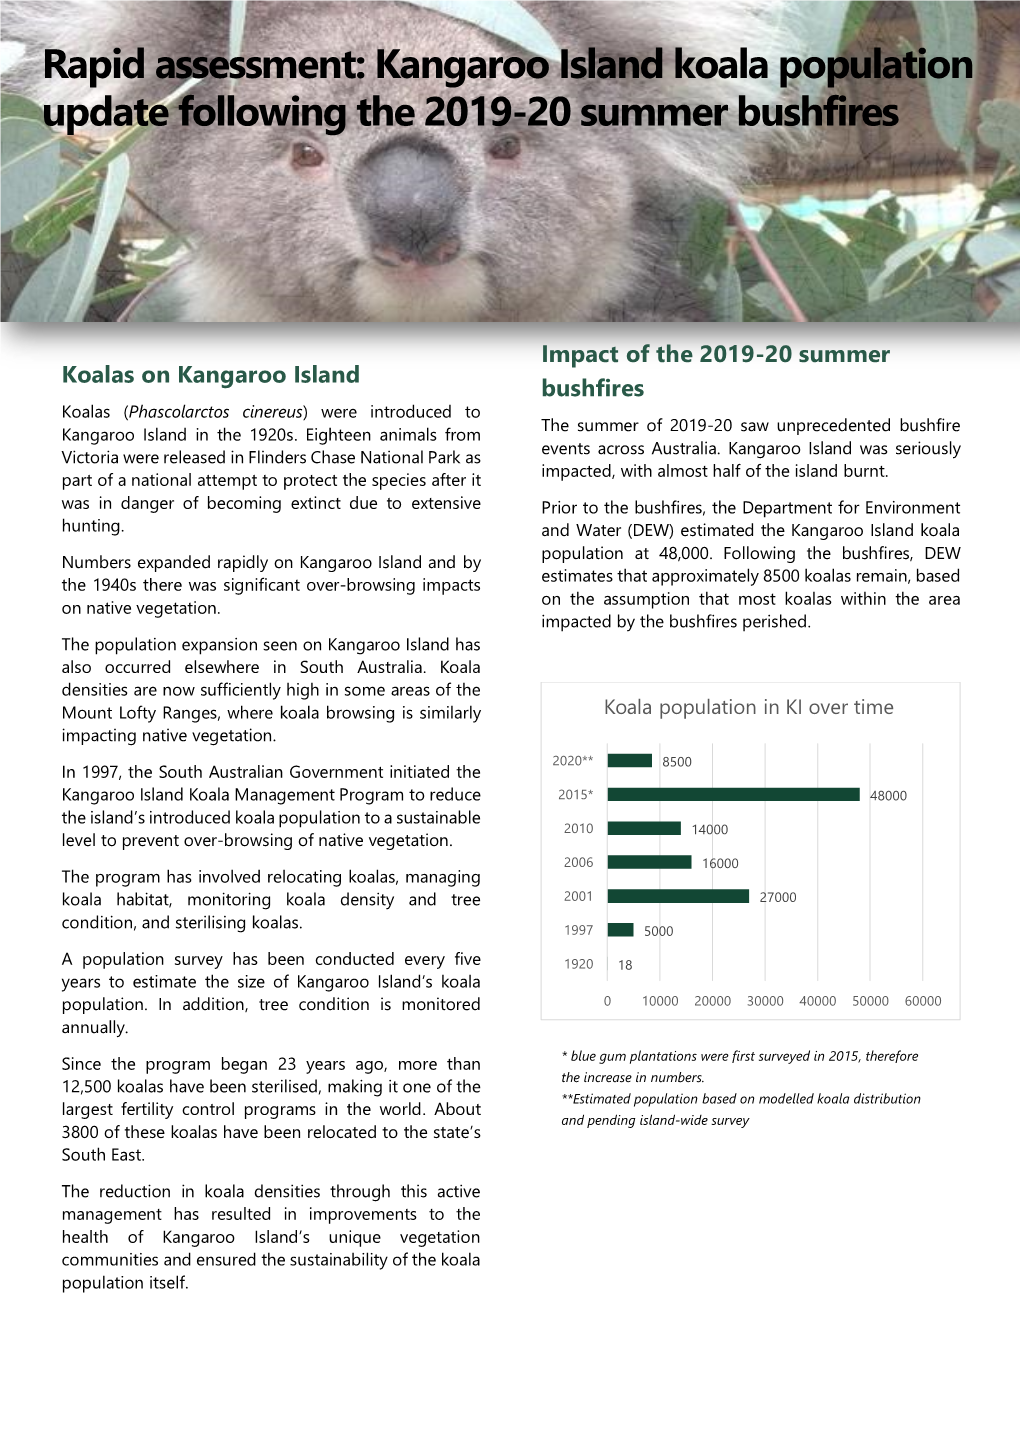 Rapid Assessment: Kangaroo Island Koala Population Update Following the 2019-20 Summer Bushfires